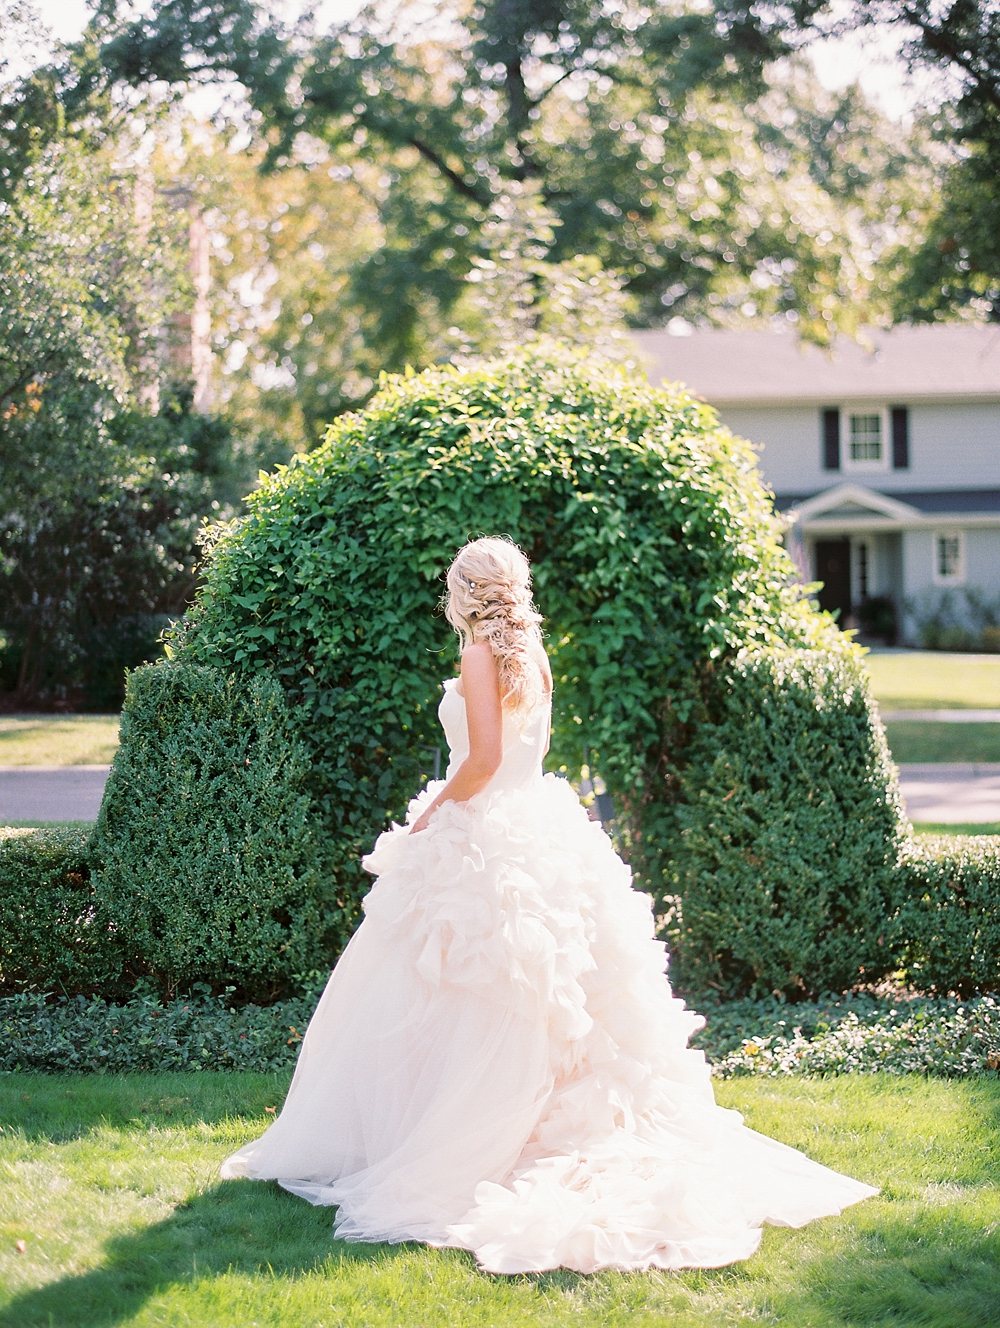 Kristin-La-Voie-Photography-chicagp-botanic-garden-wedding-41